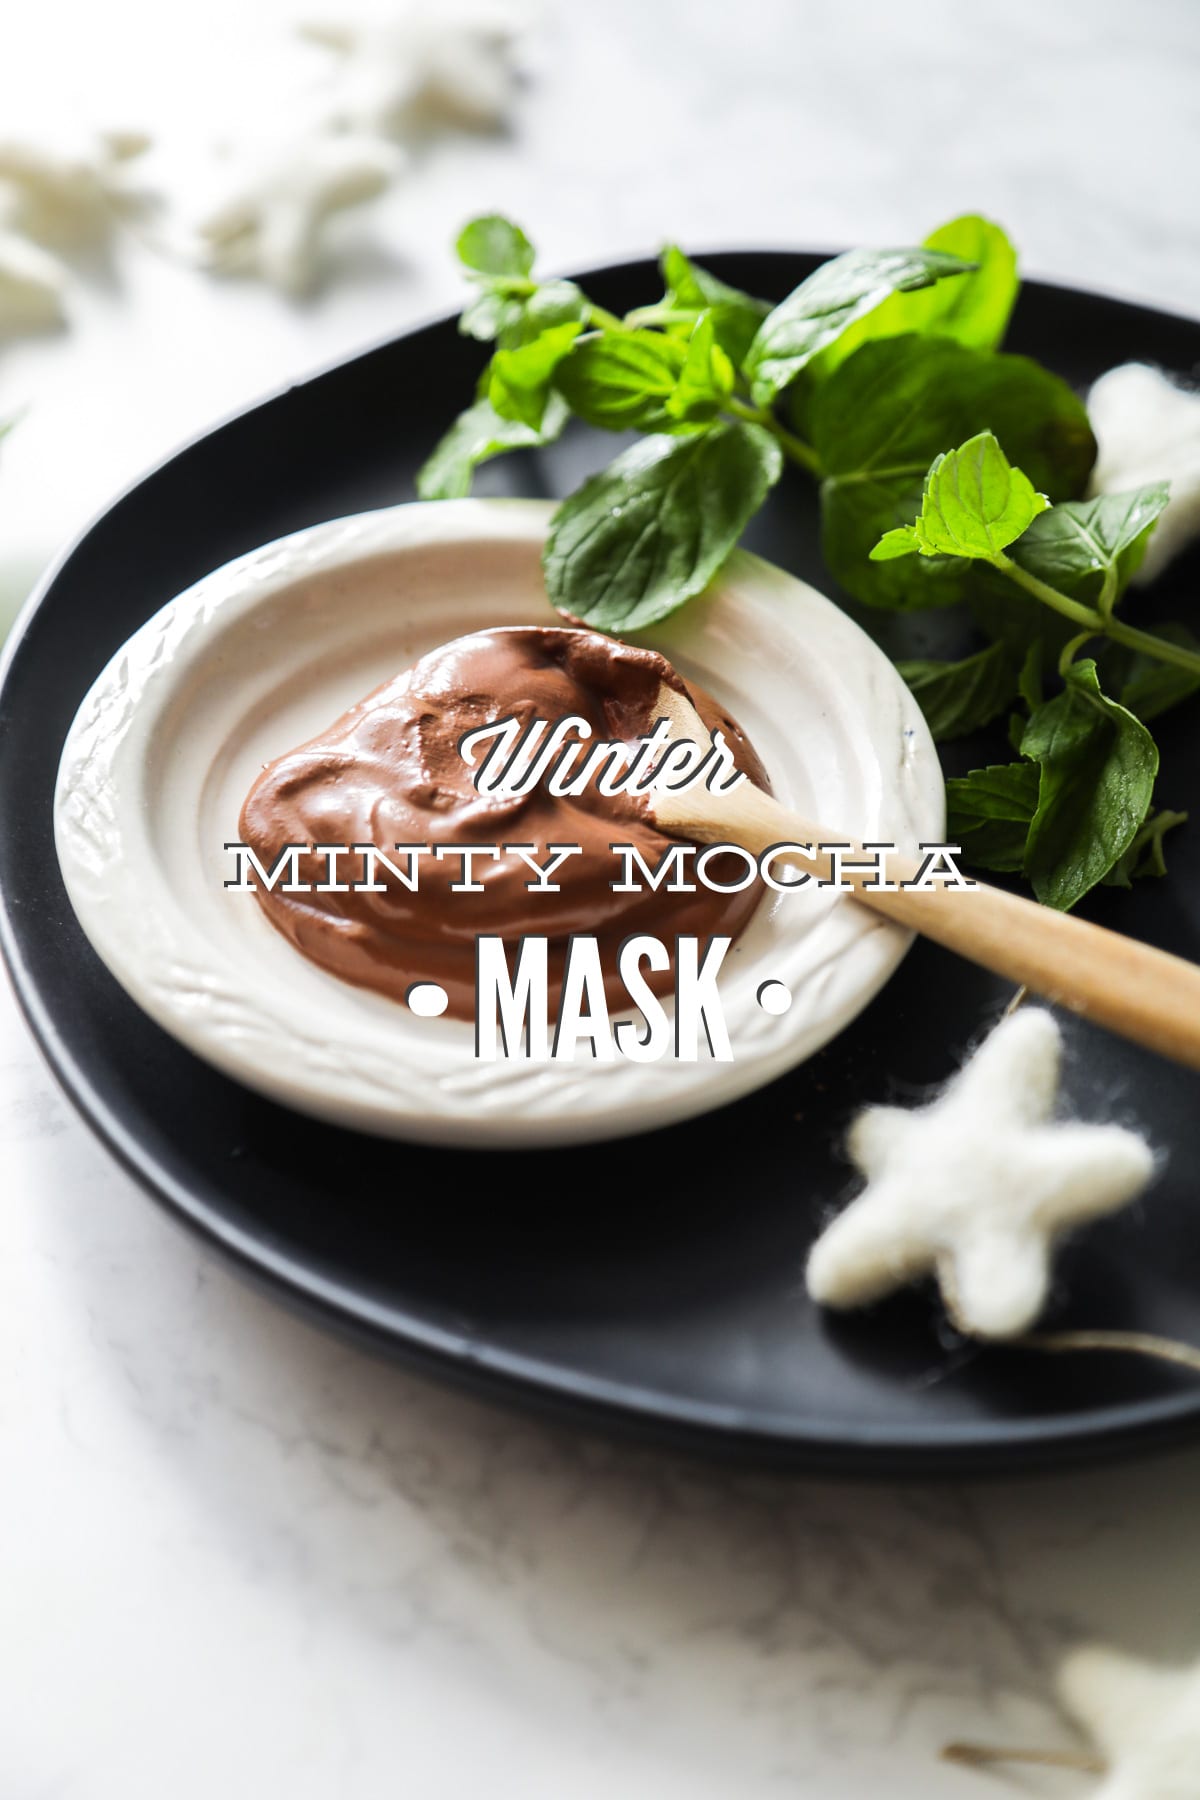 Seasonal Facial Mask: Winter Minty Mocha Mask